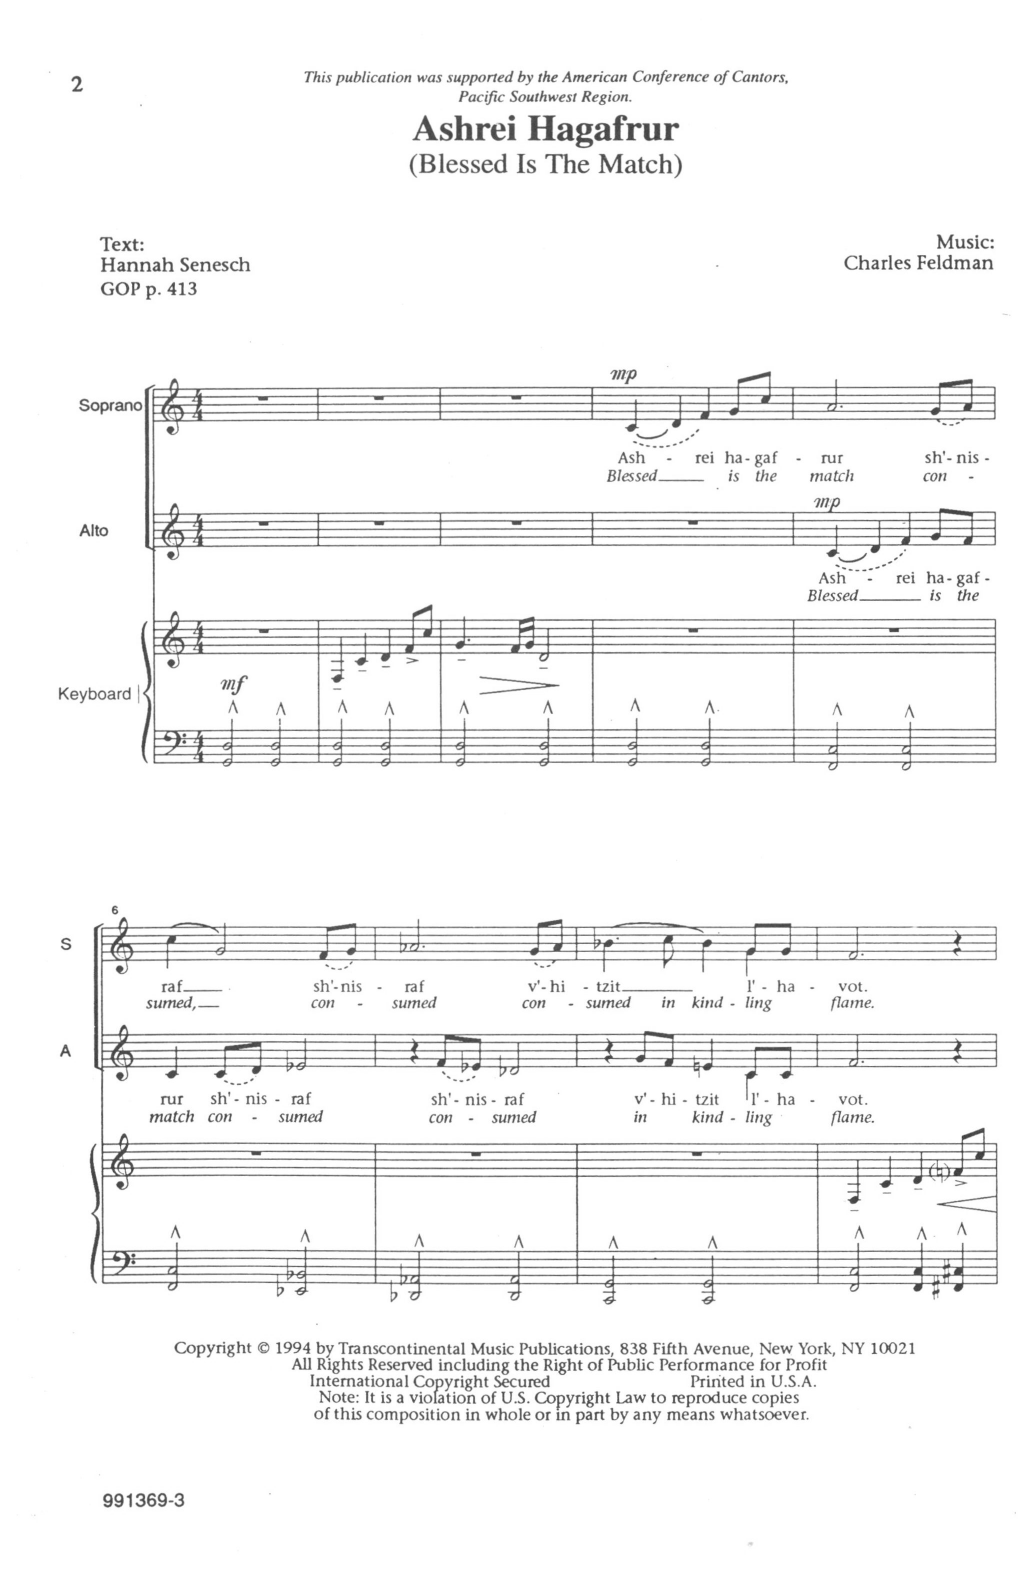 Charles Feldman Ashrei Hagafrur (Blessed Is The Match) Sheet Music Notes & Chords for 2-Part Choir - Download or Print PDF